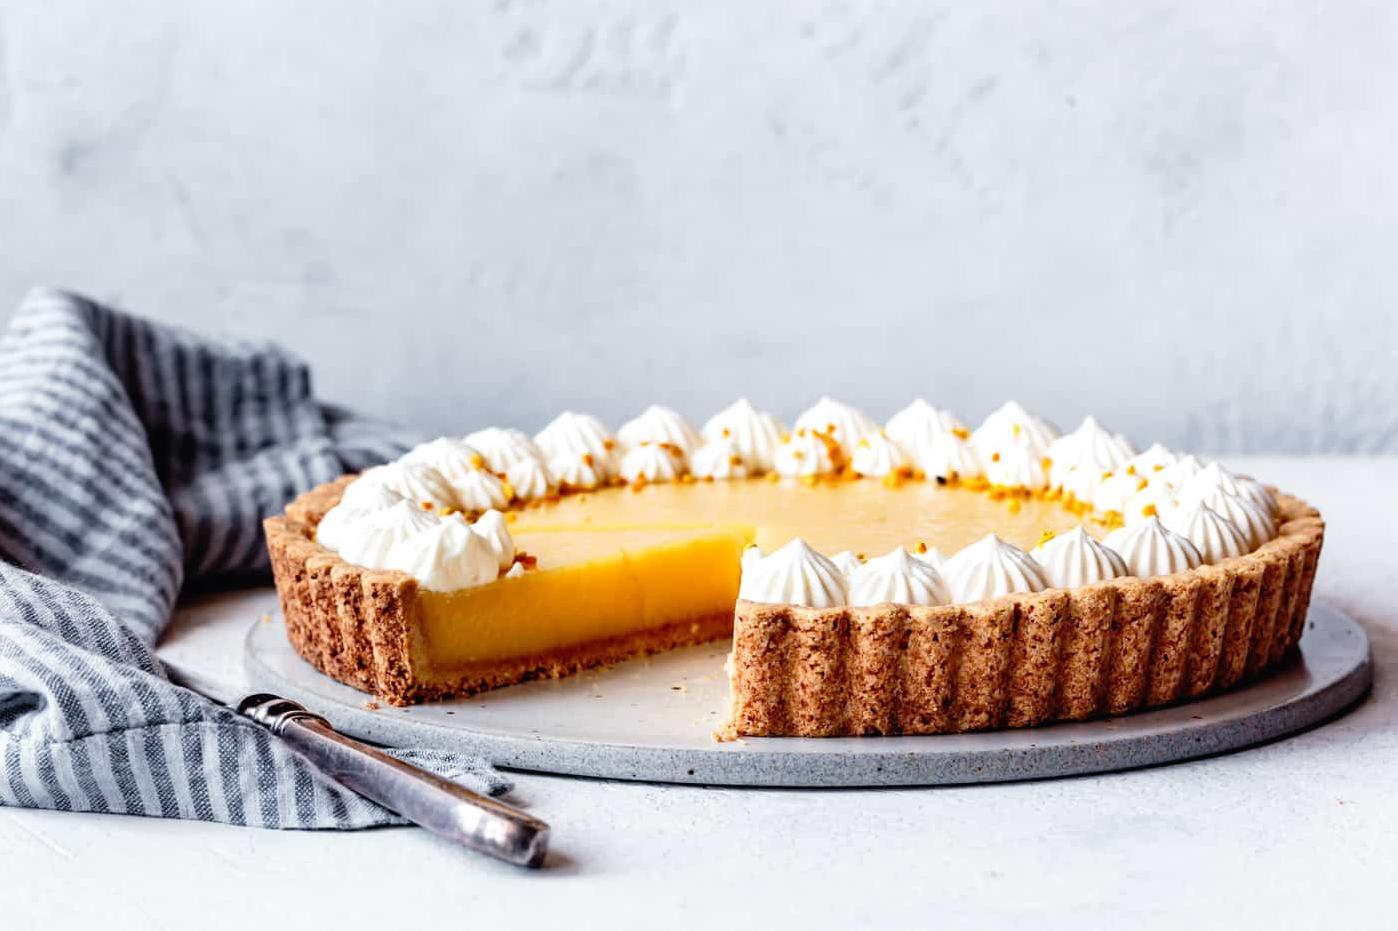  Creamy, citrusy, and delicious- all in one bite!